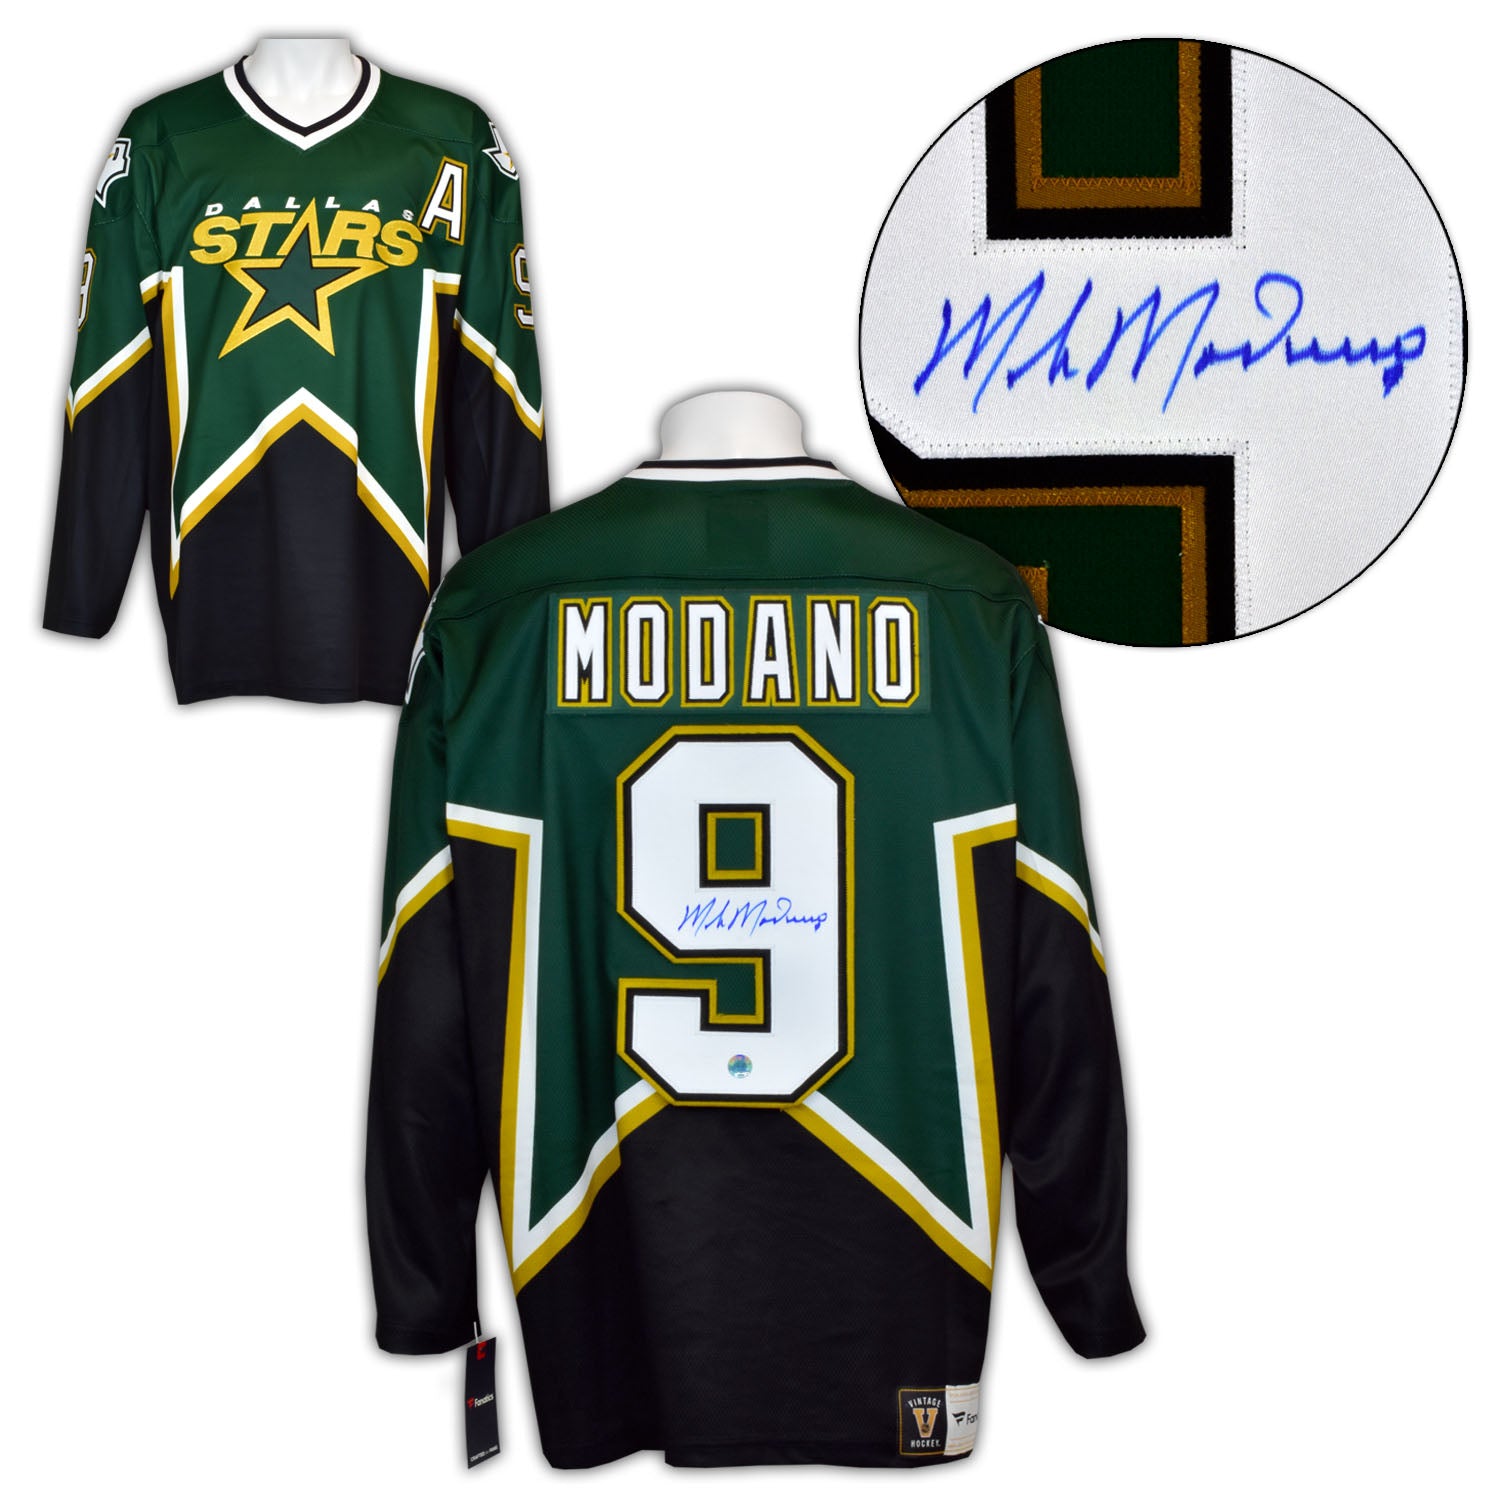 Framed Minnesota North Stars Mike Modano Autographed Signed Jersey